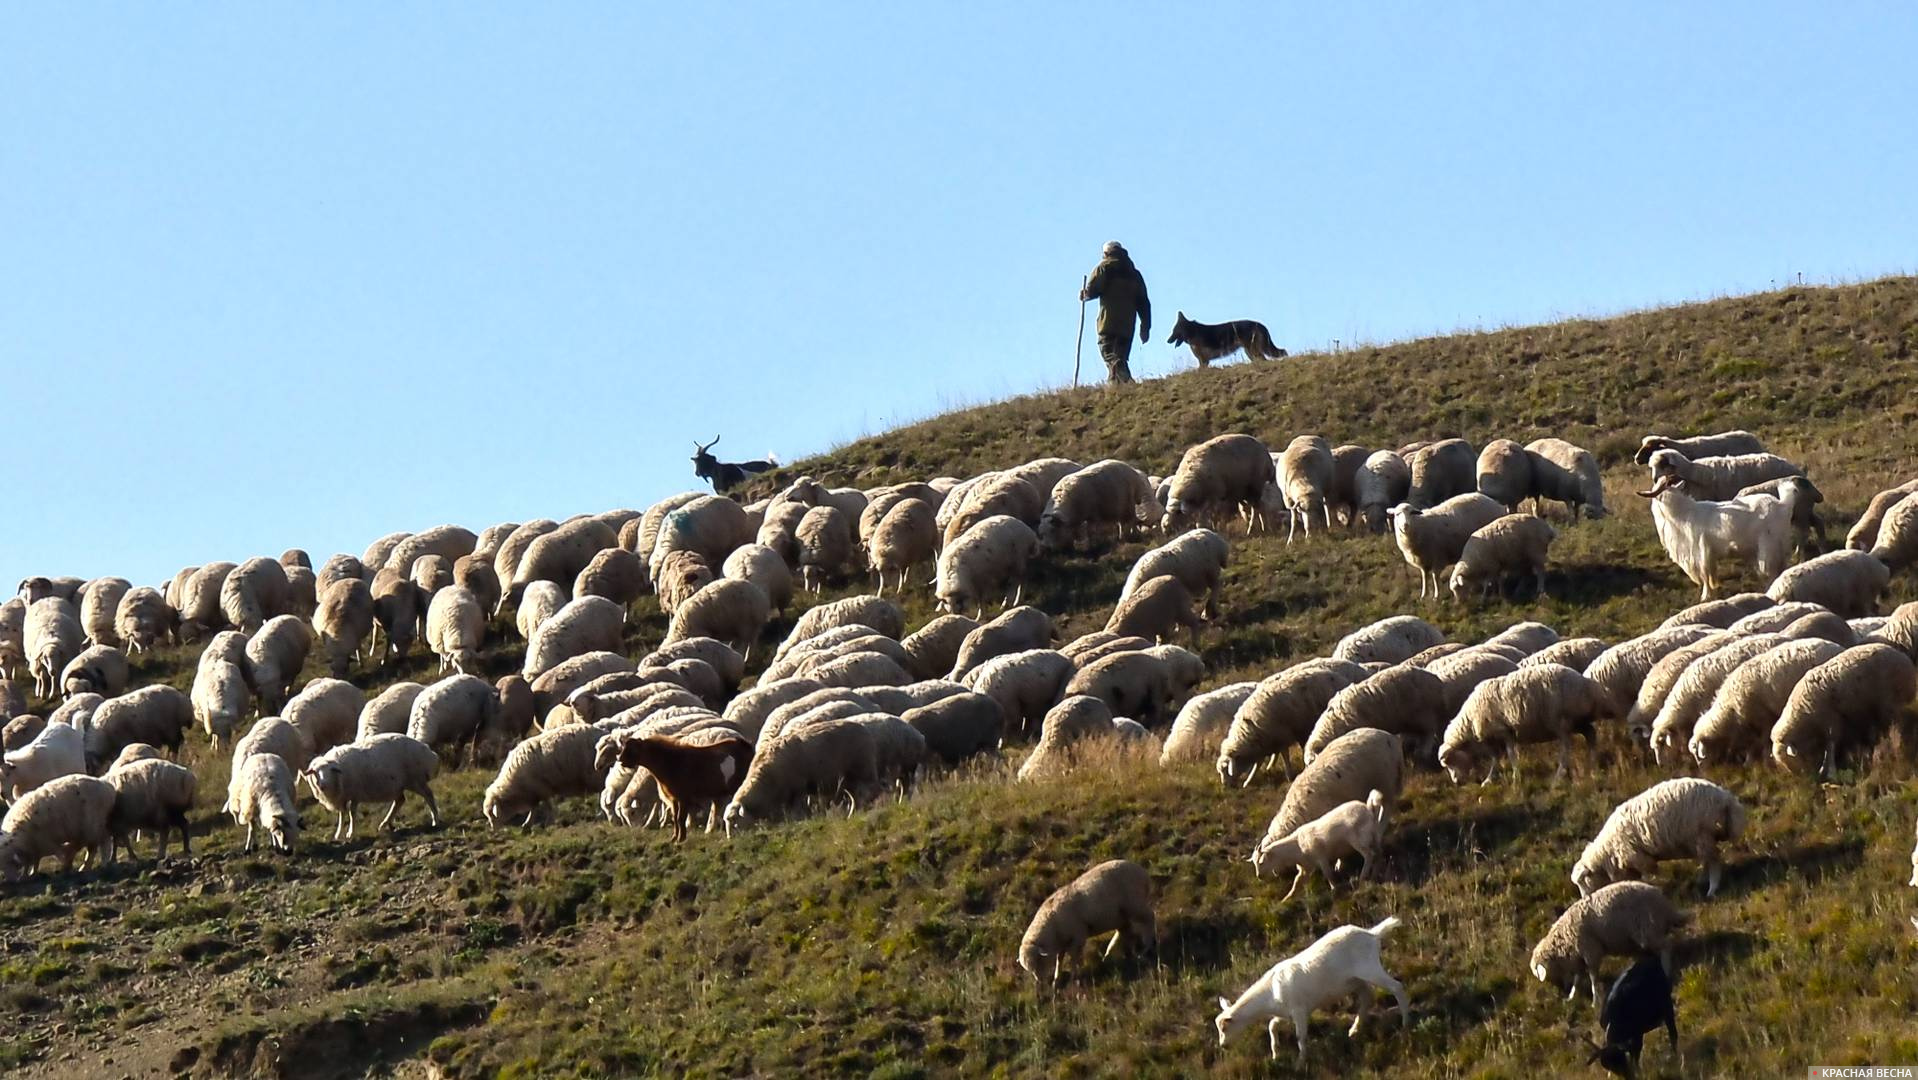 Фото отара овец